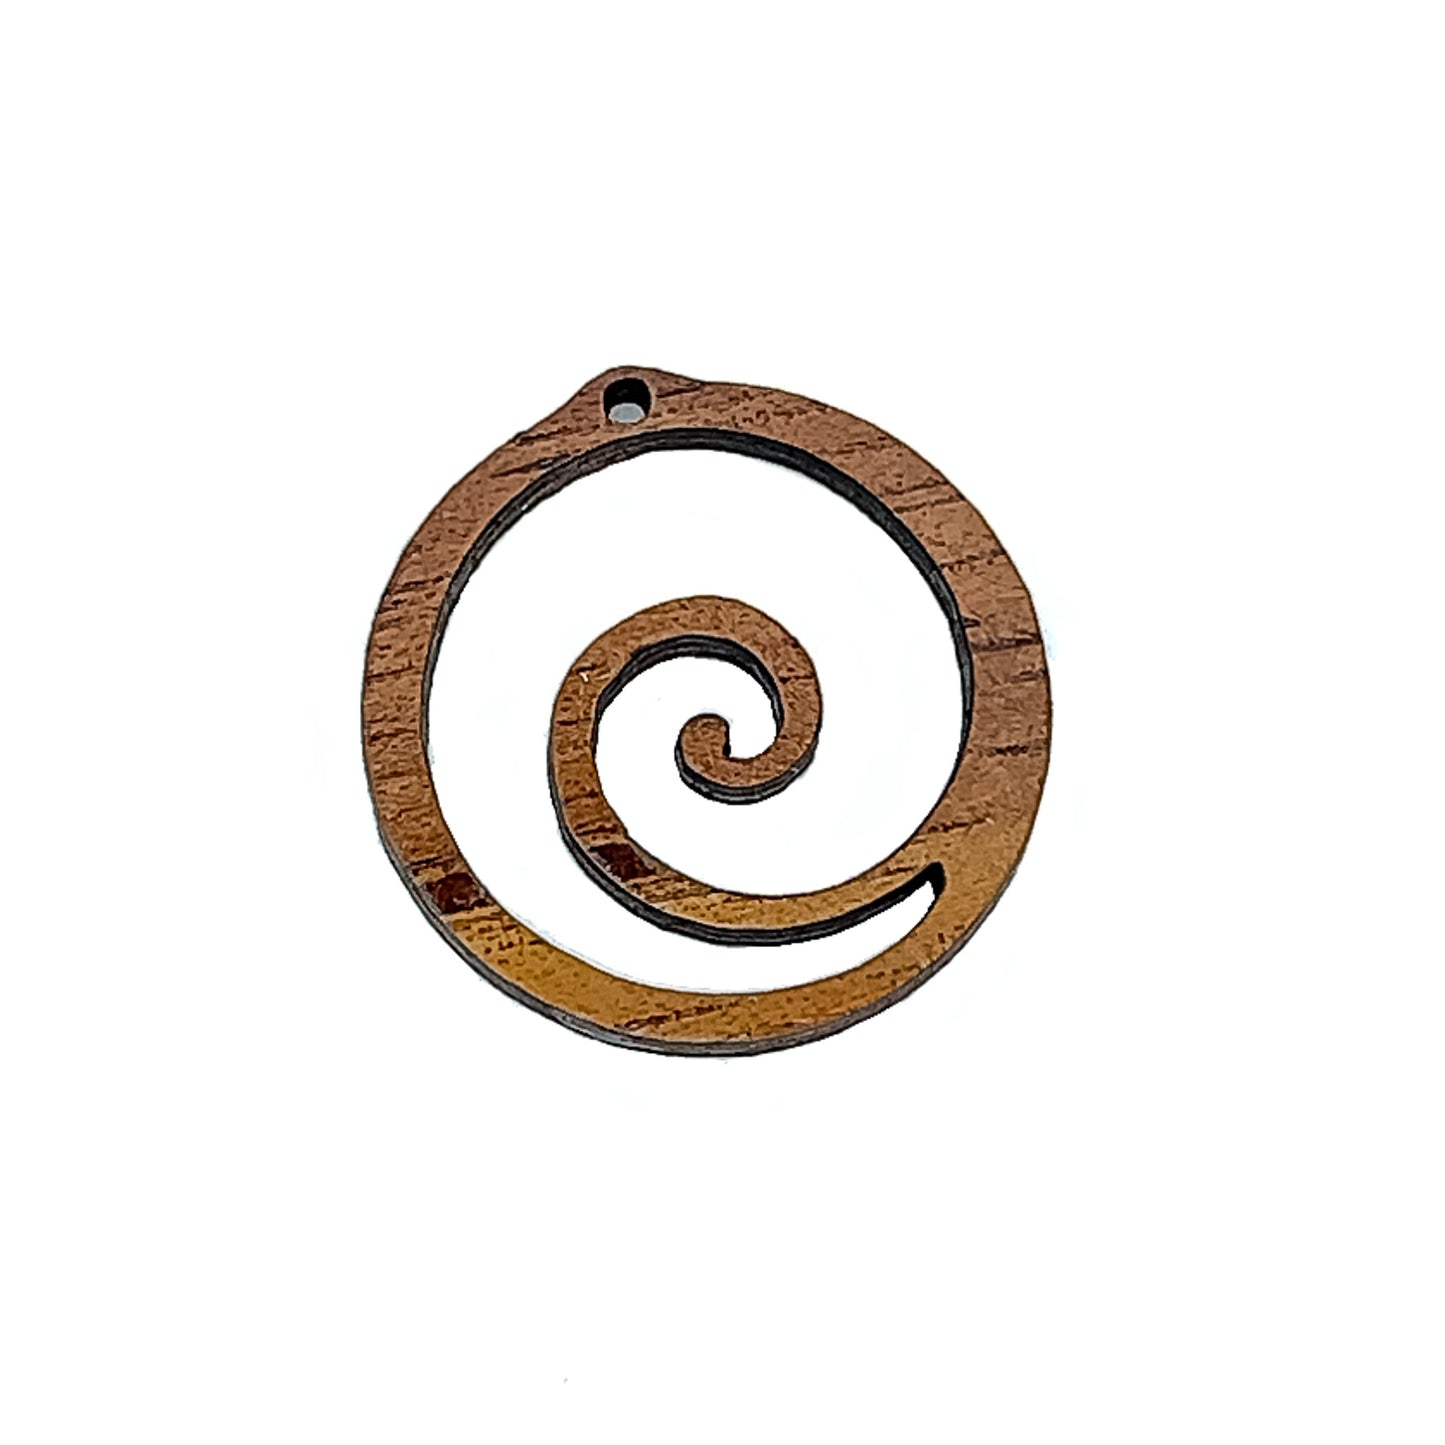 Spiral Wave Koa Charm - 1 pc.-The Bead Gallery Honolulu